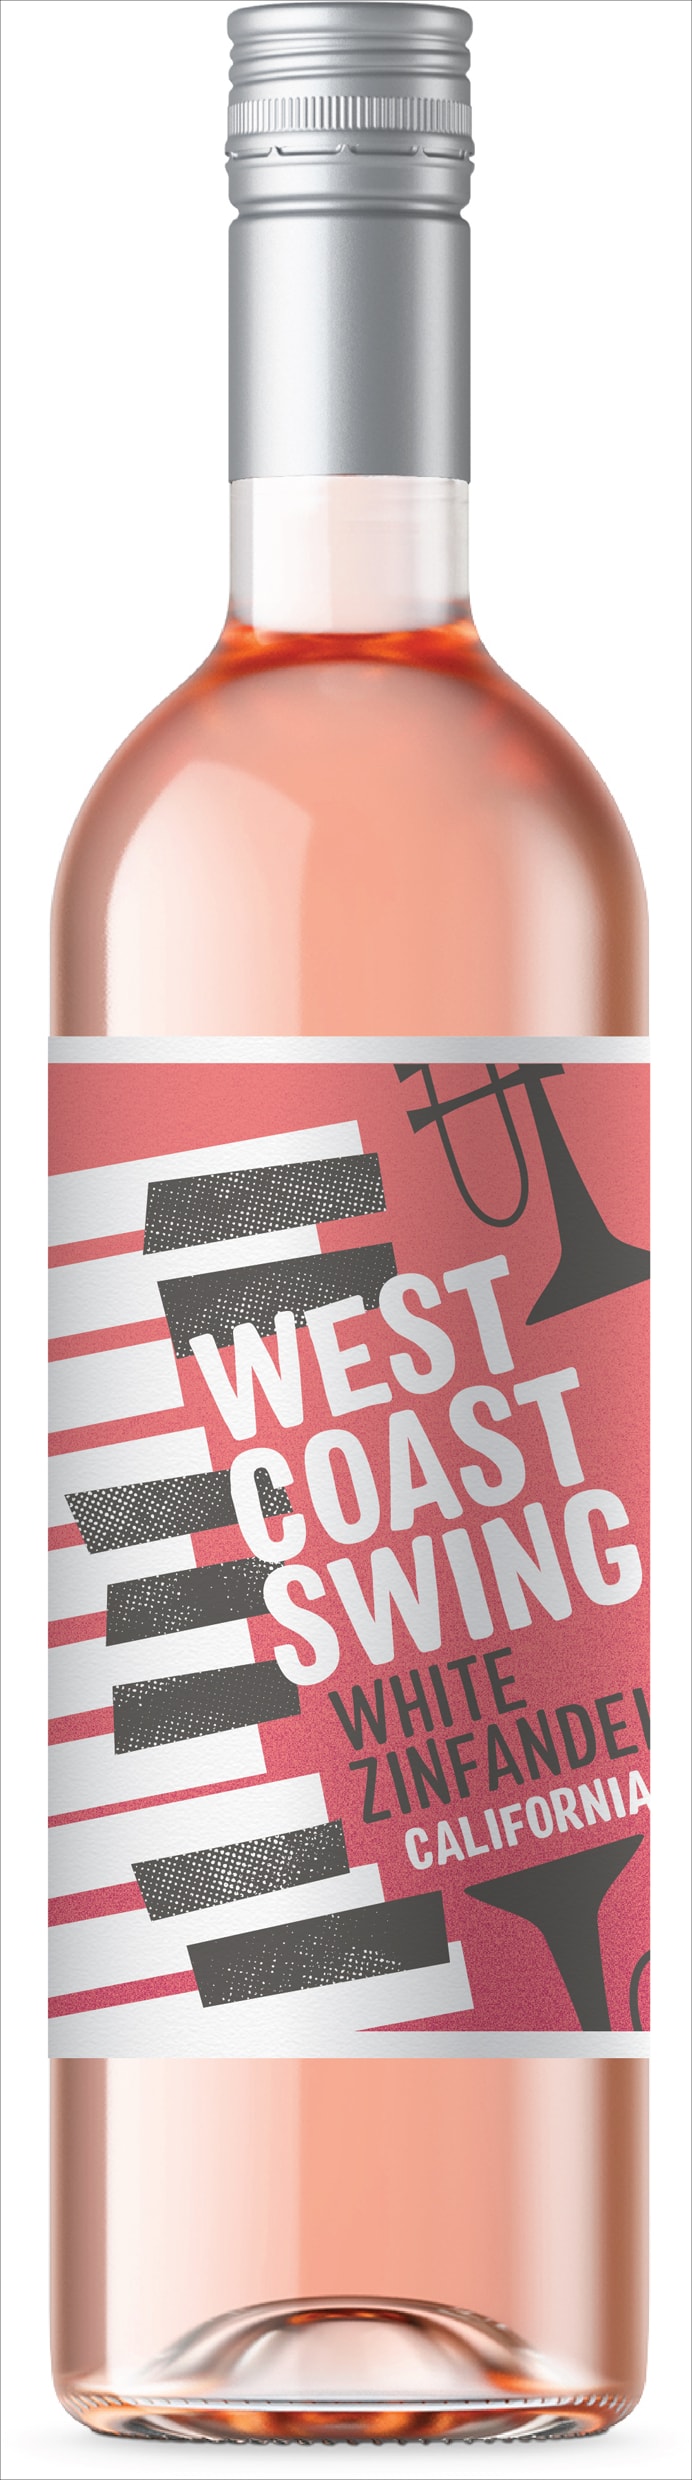 West Coast Swing White Zinfandel 2022 75cl - Buy West Coast Swing Wines from GREAT WINES DIRECT wine shop